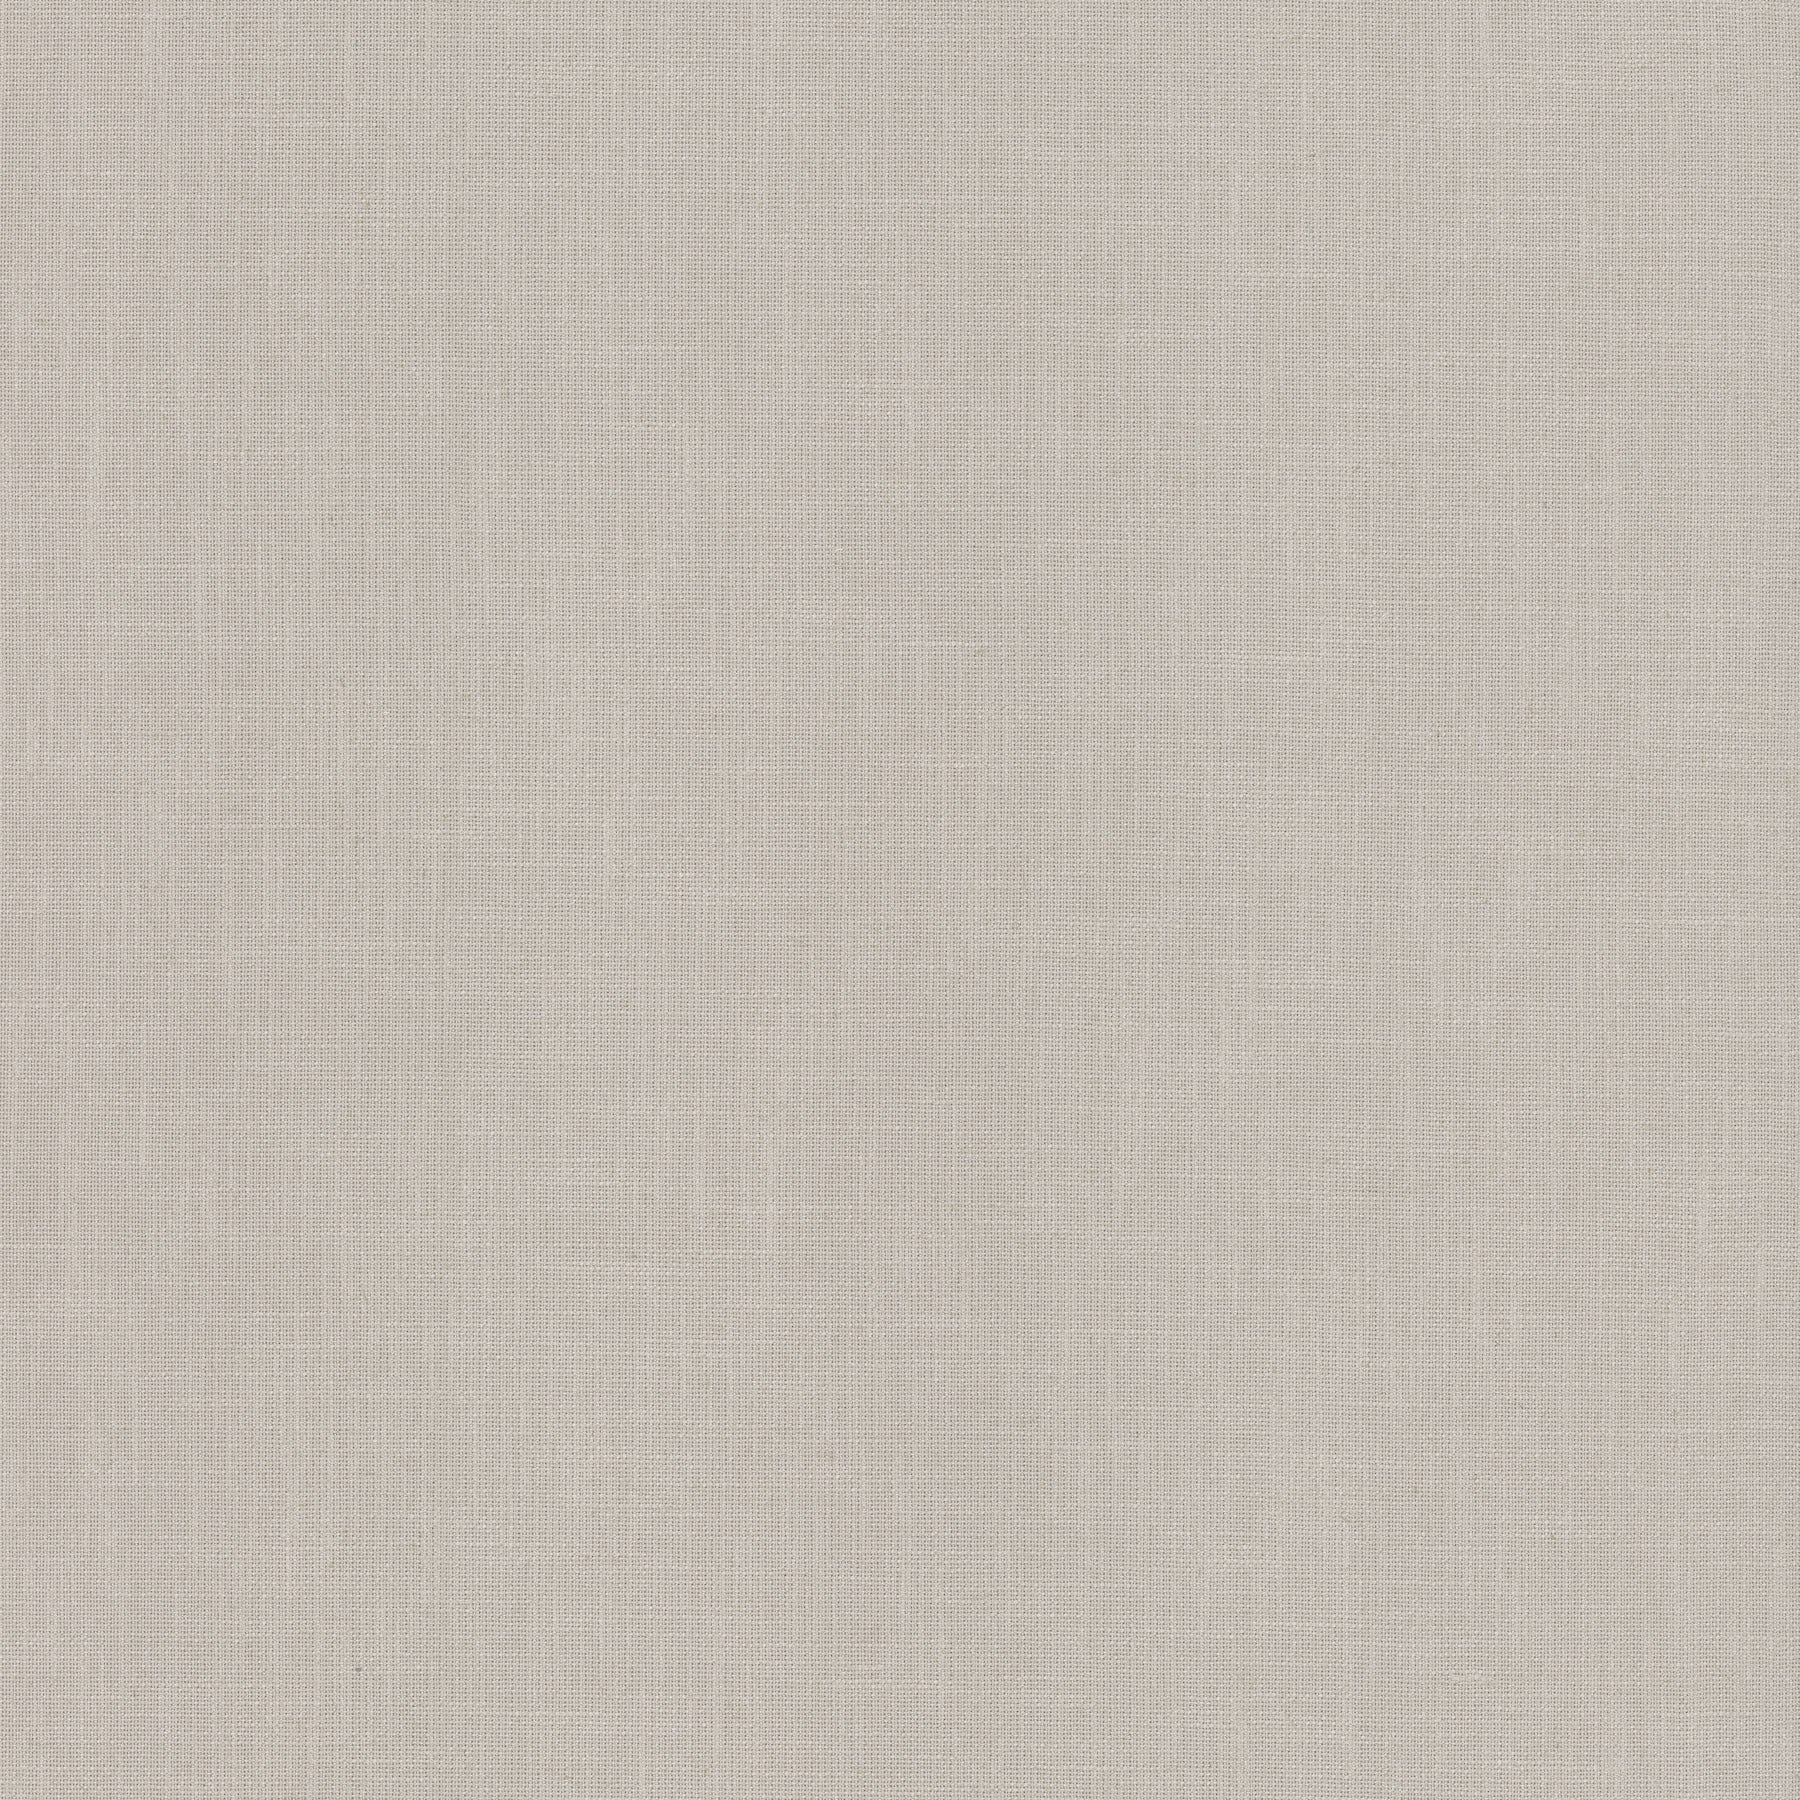 Classic Linen Wallpaper Wallpaper Ronald Redding Designs Yard Grey 